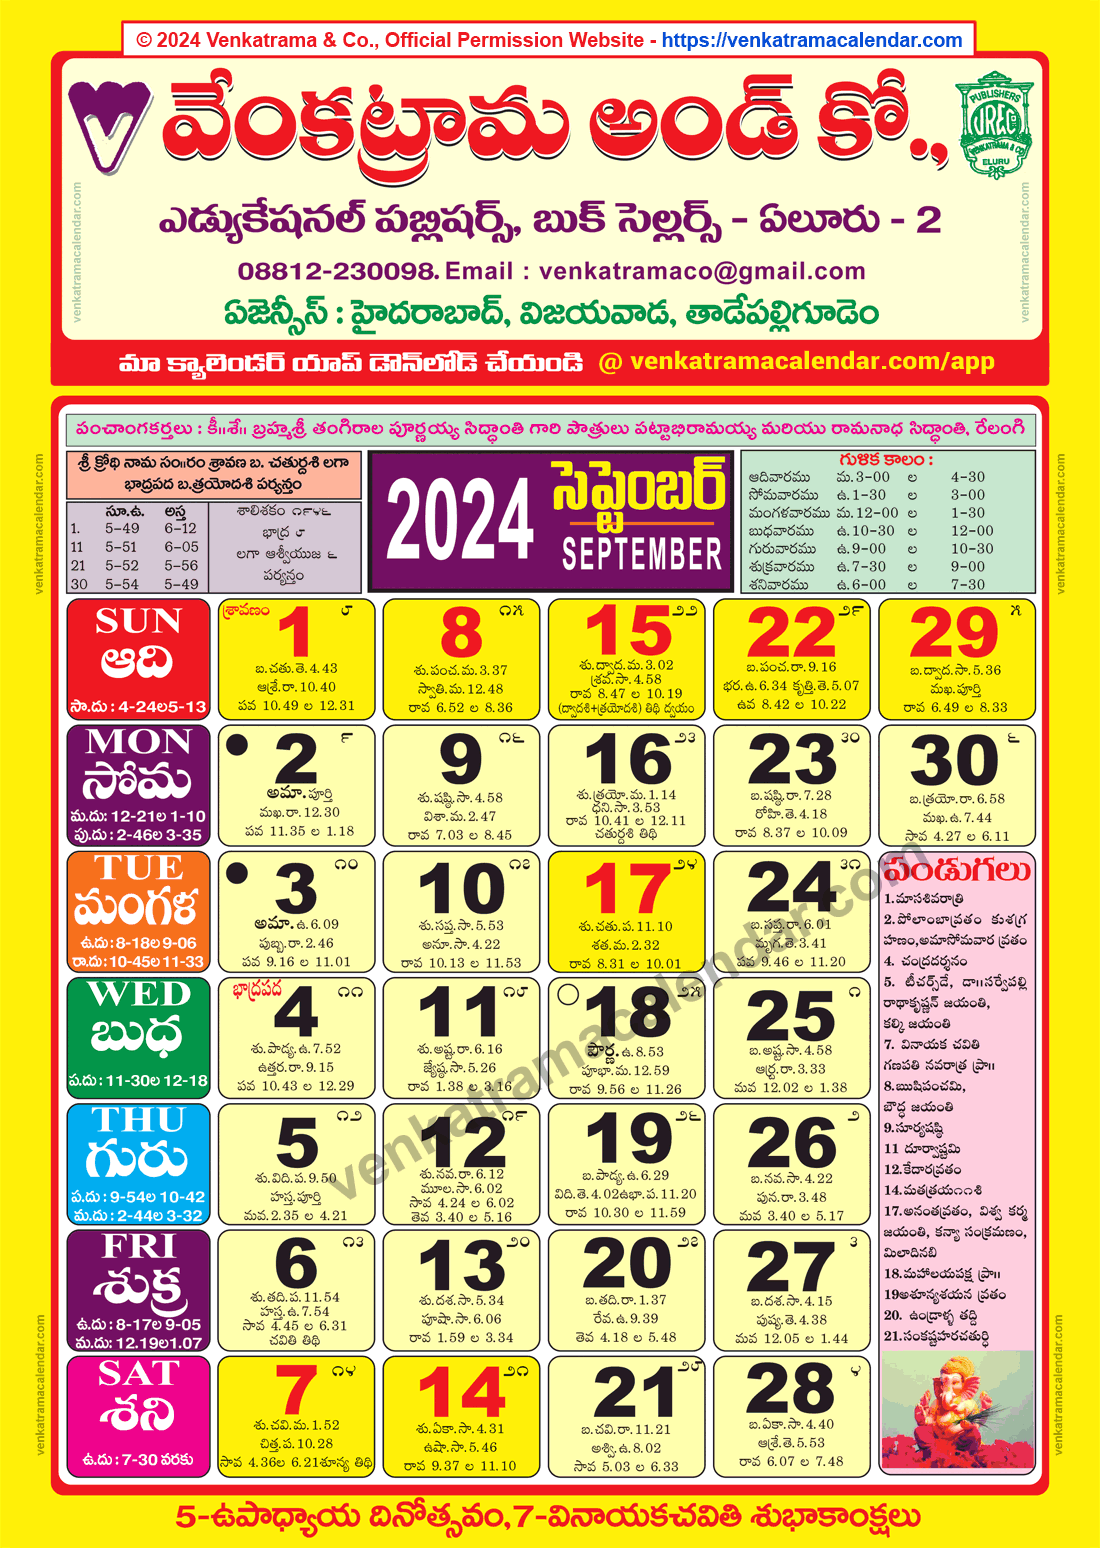 Venkatrama Calendar 2024 September Venkatrama Telugu Calendar 2024